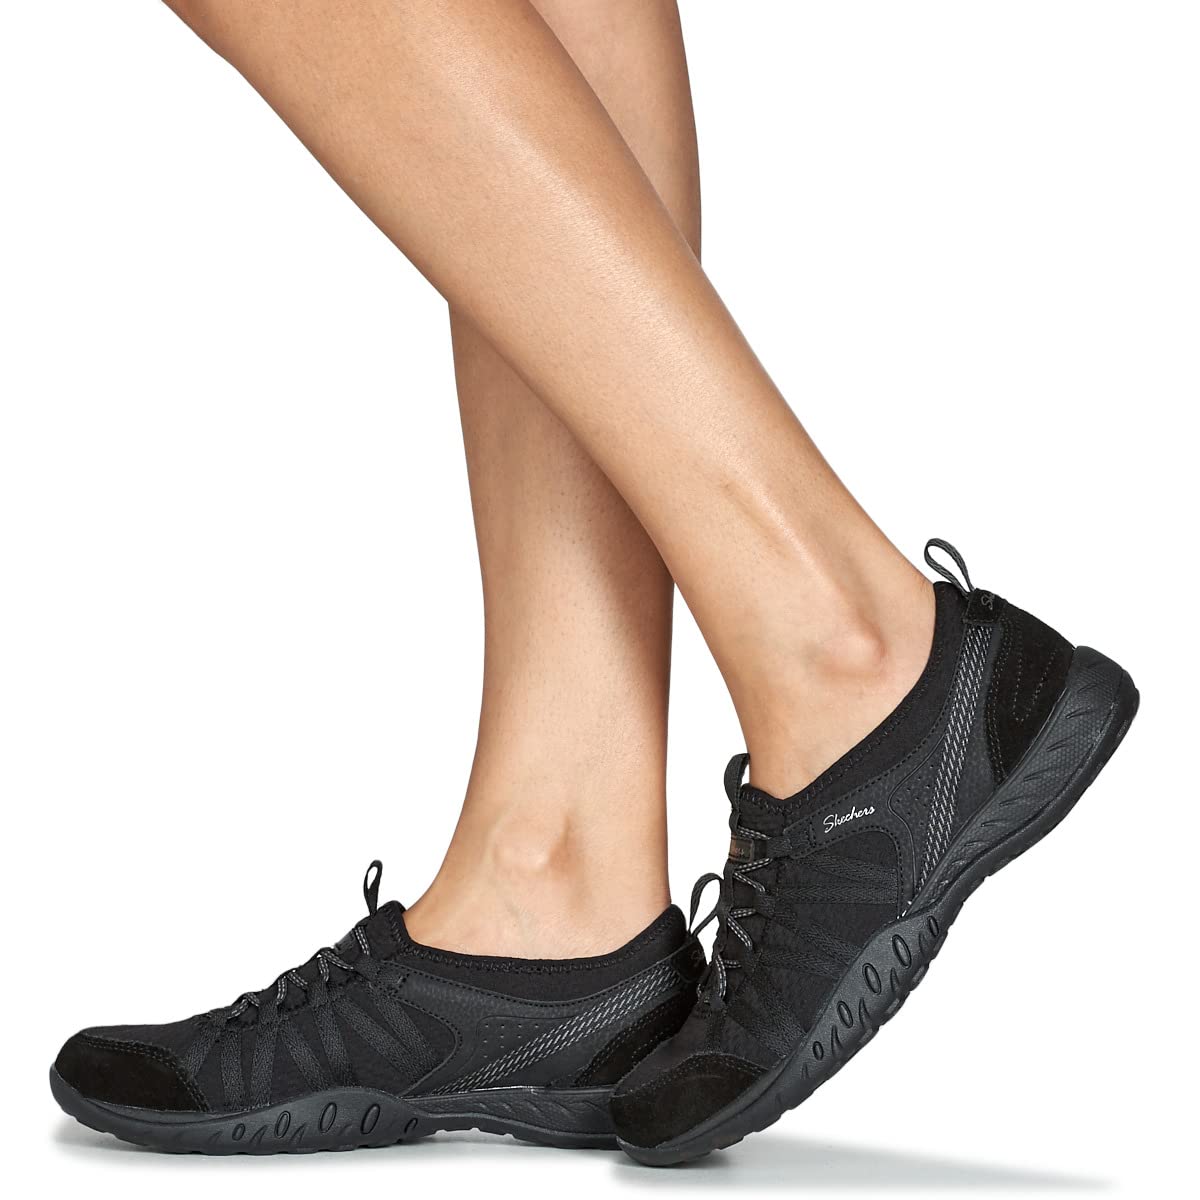 Skechers Women's Relaxed Fit, Breathe-Easy Rugged Sneaker, Black, 9 M US